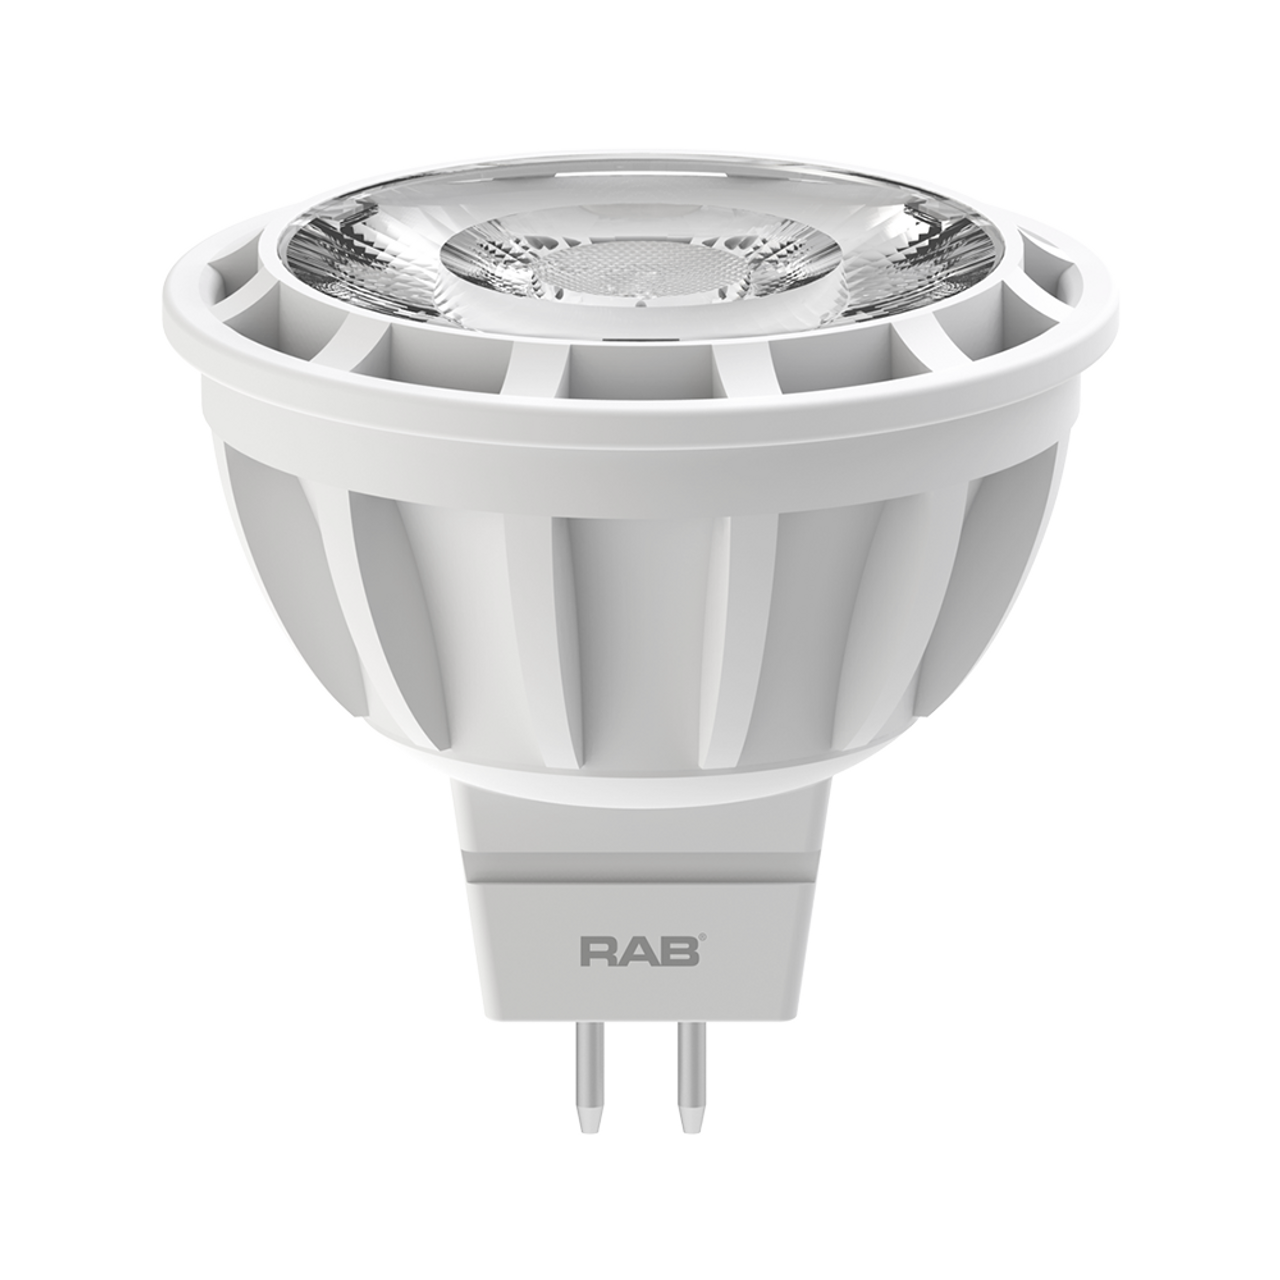 RAB LED MR16 Lamp - 7.5 Watt - 3000K - 12 Volt